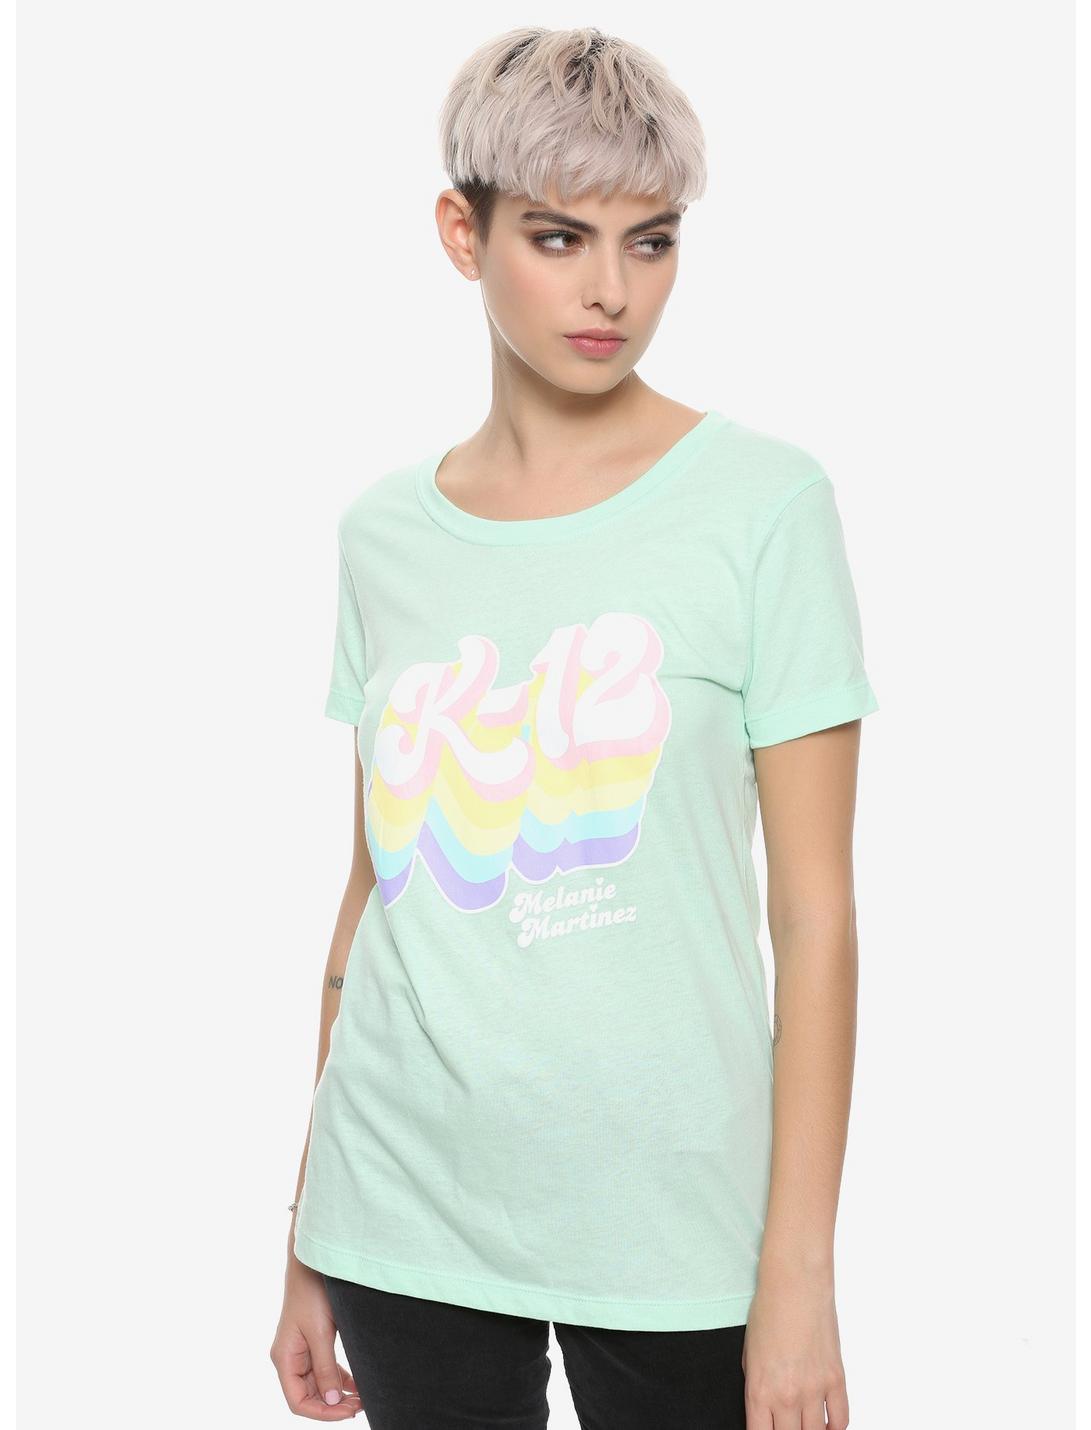 Melanie Martinez K-12 Rainbow Logo Girls T-Shirt, MINT, hi-res